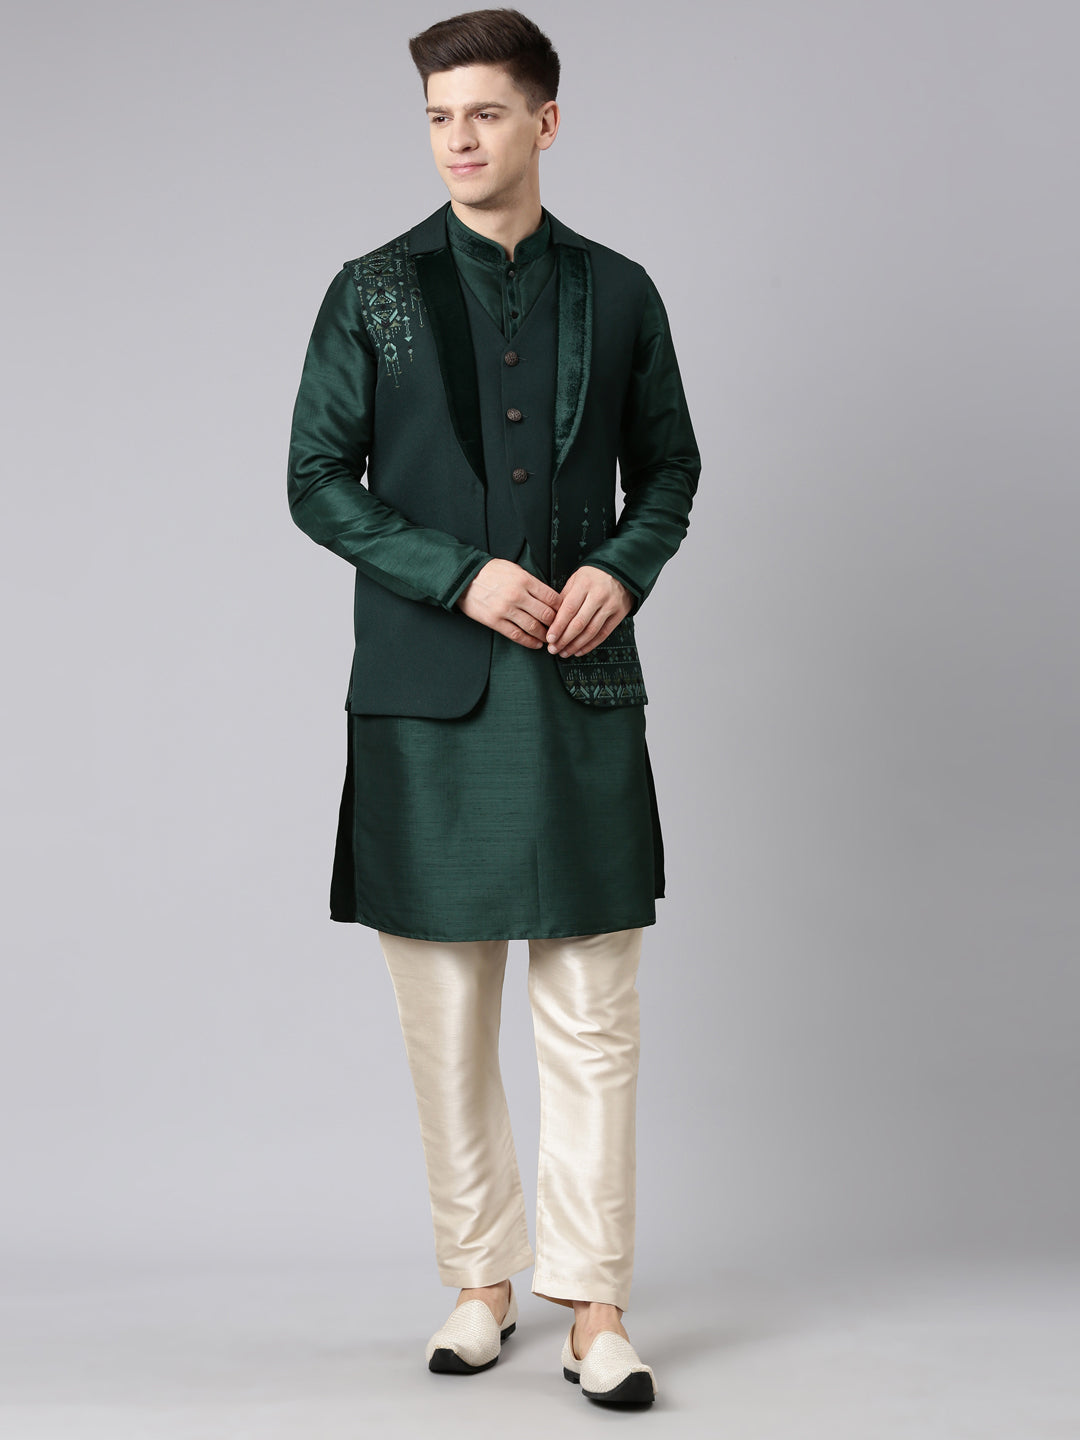 Green Layered lapel Style Jacket